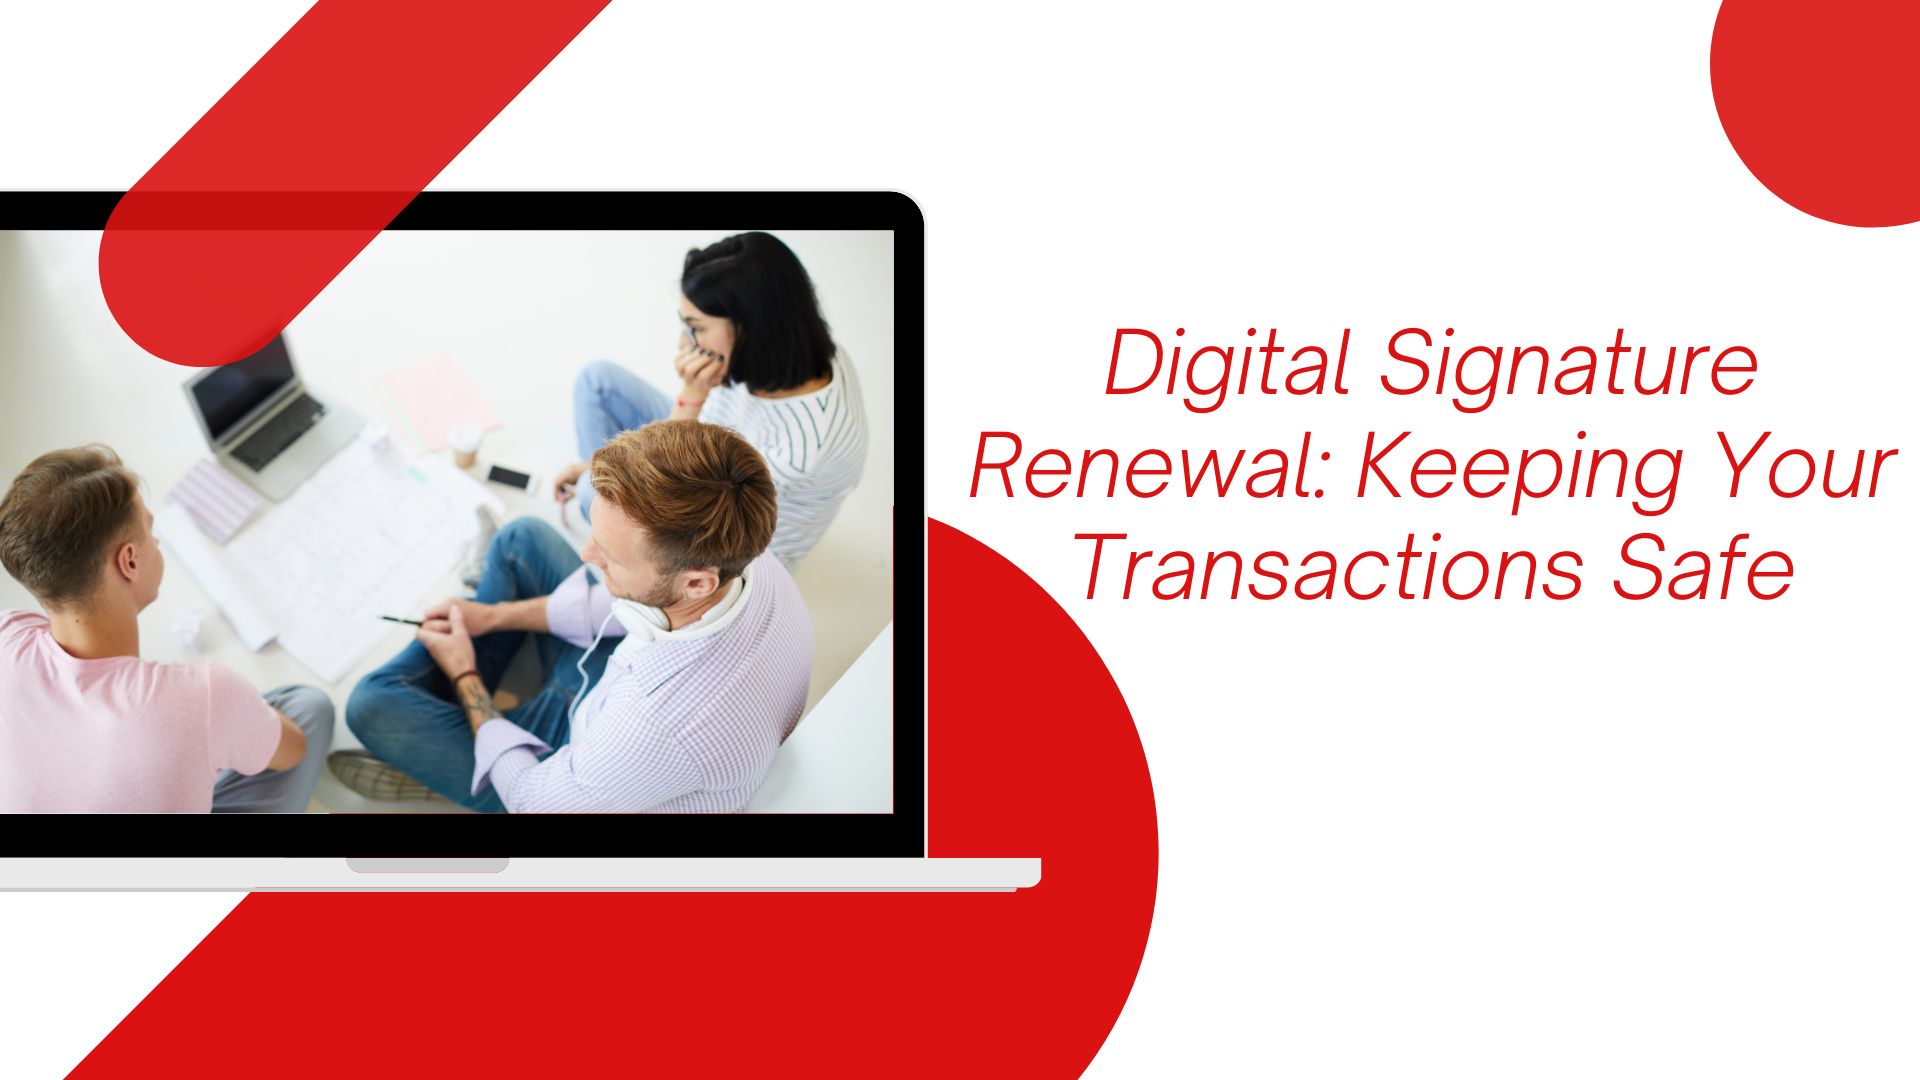 Digital Signature Renewal: Keeping Your Transactions Safe